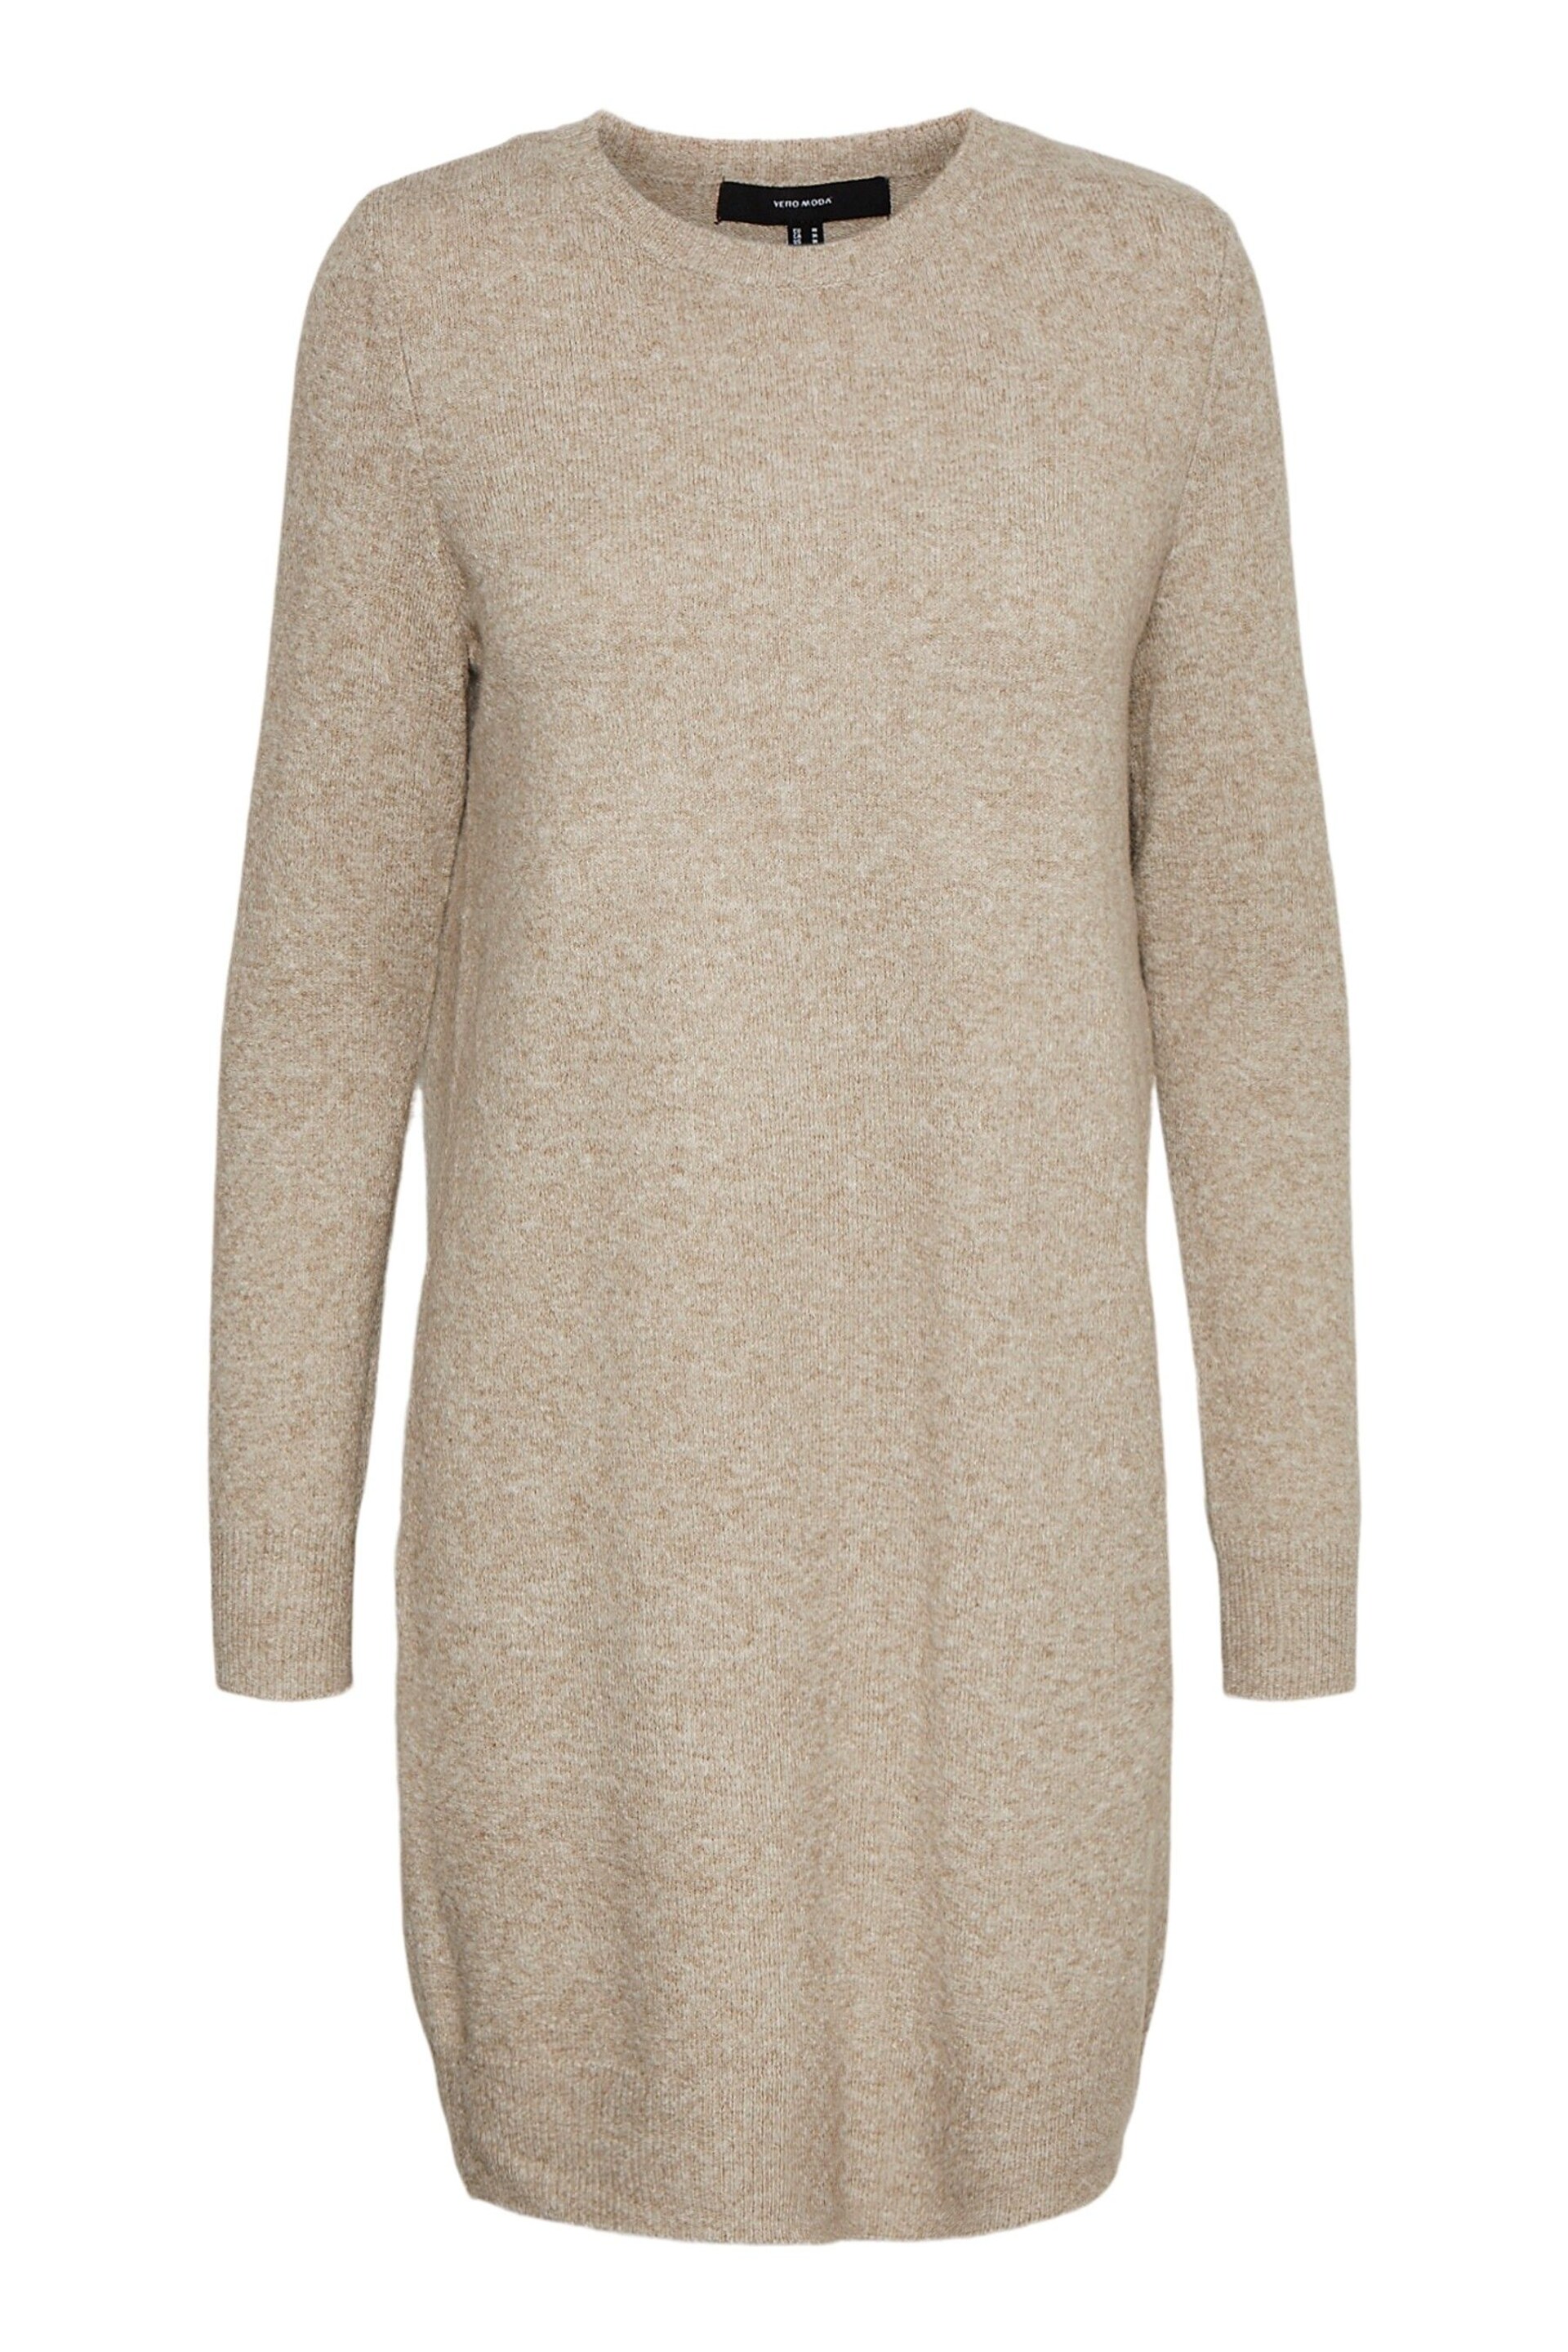 VERO MODA Grey Cosy Long Sleeve Jumper Dress - Image 6 of 6